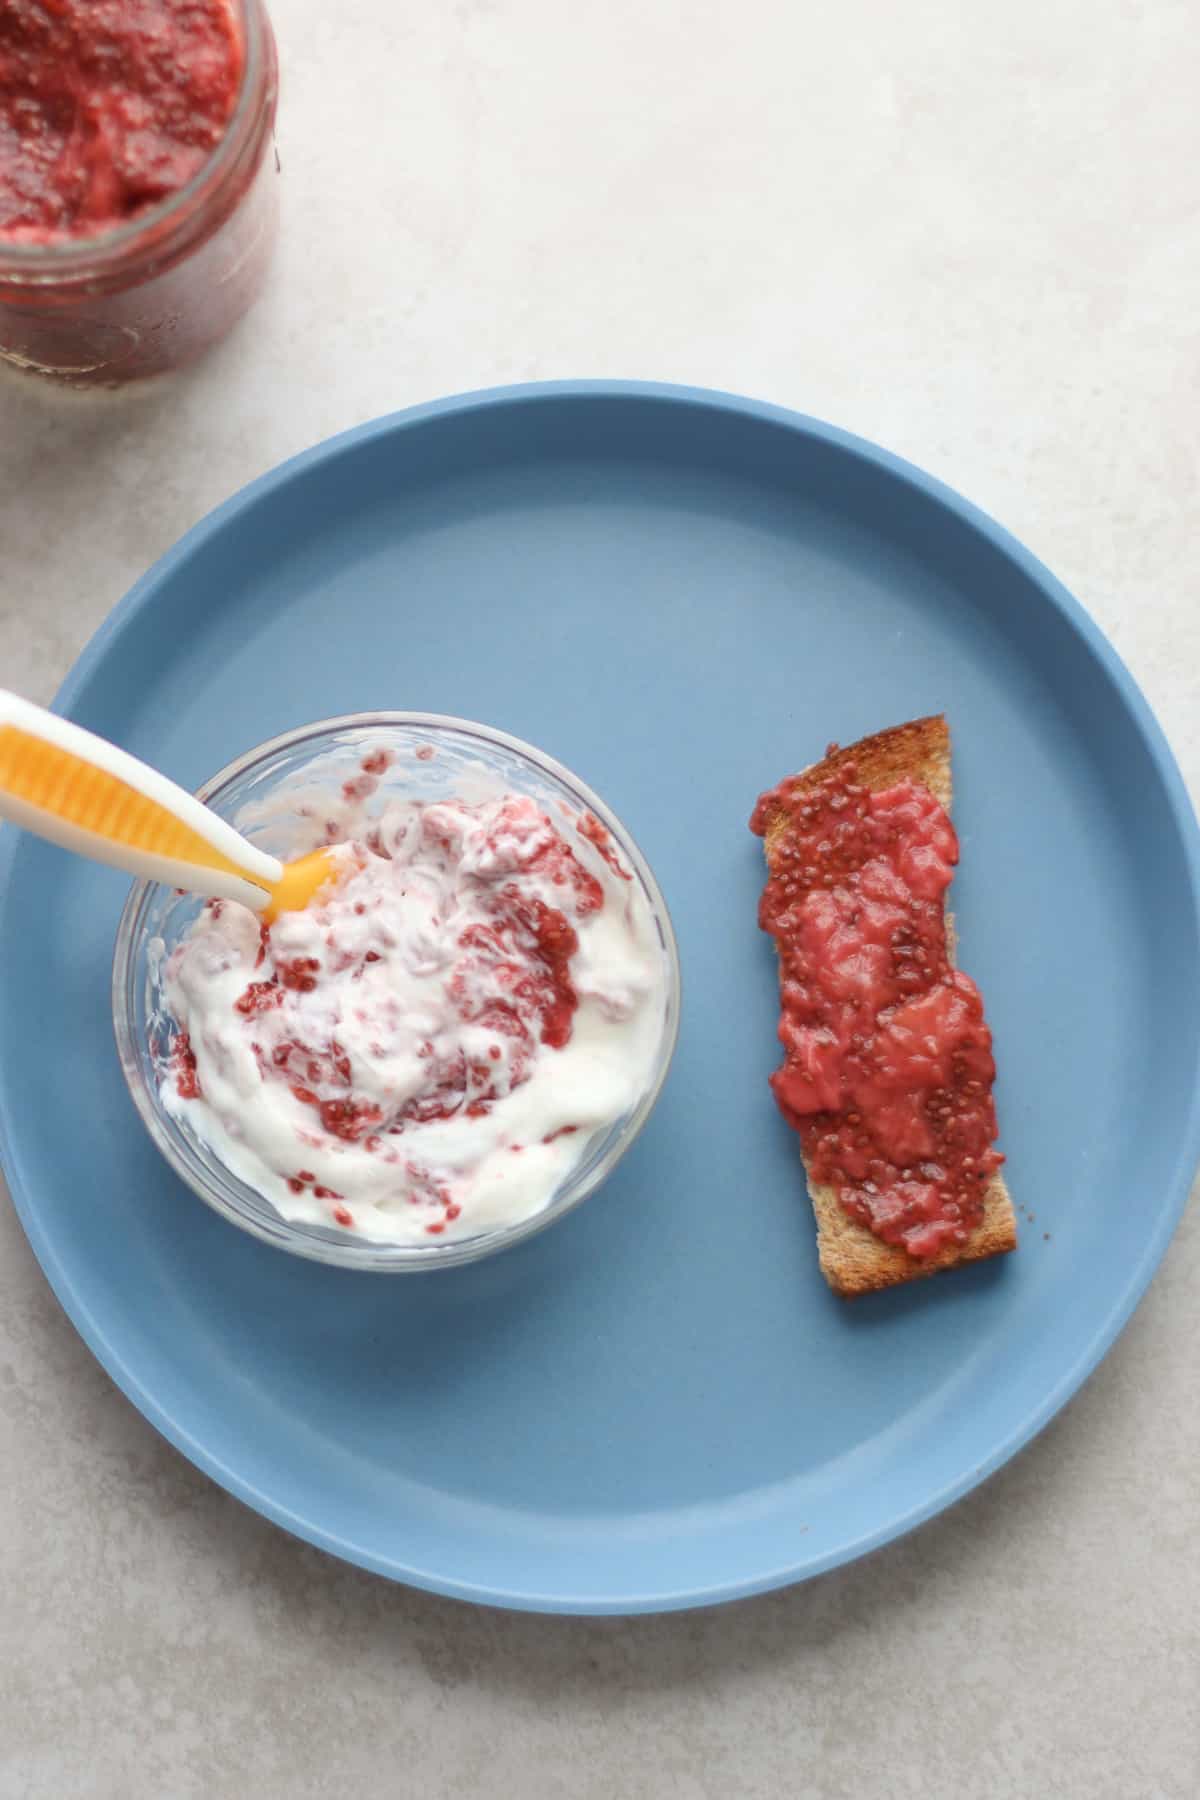 strawberry jam on toast strip and stirred into yogurt.